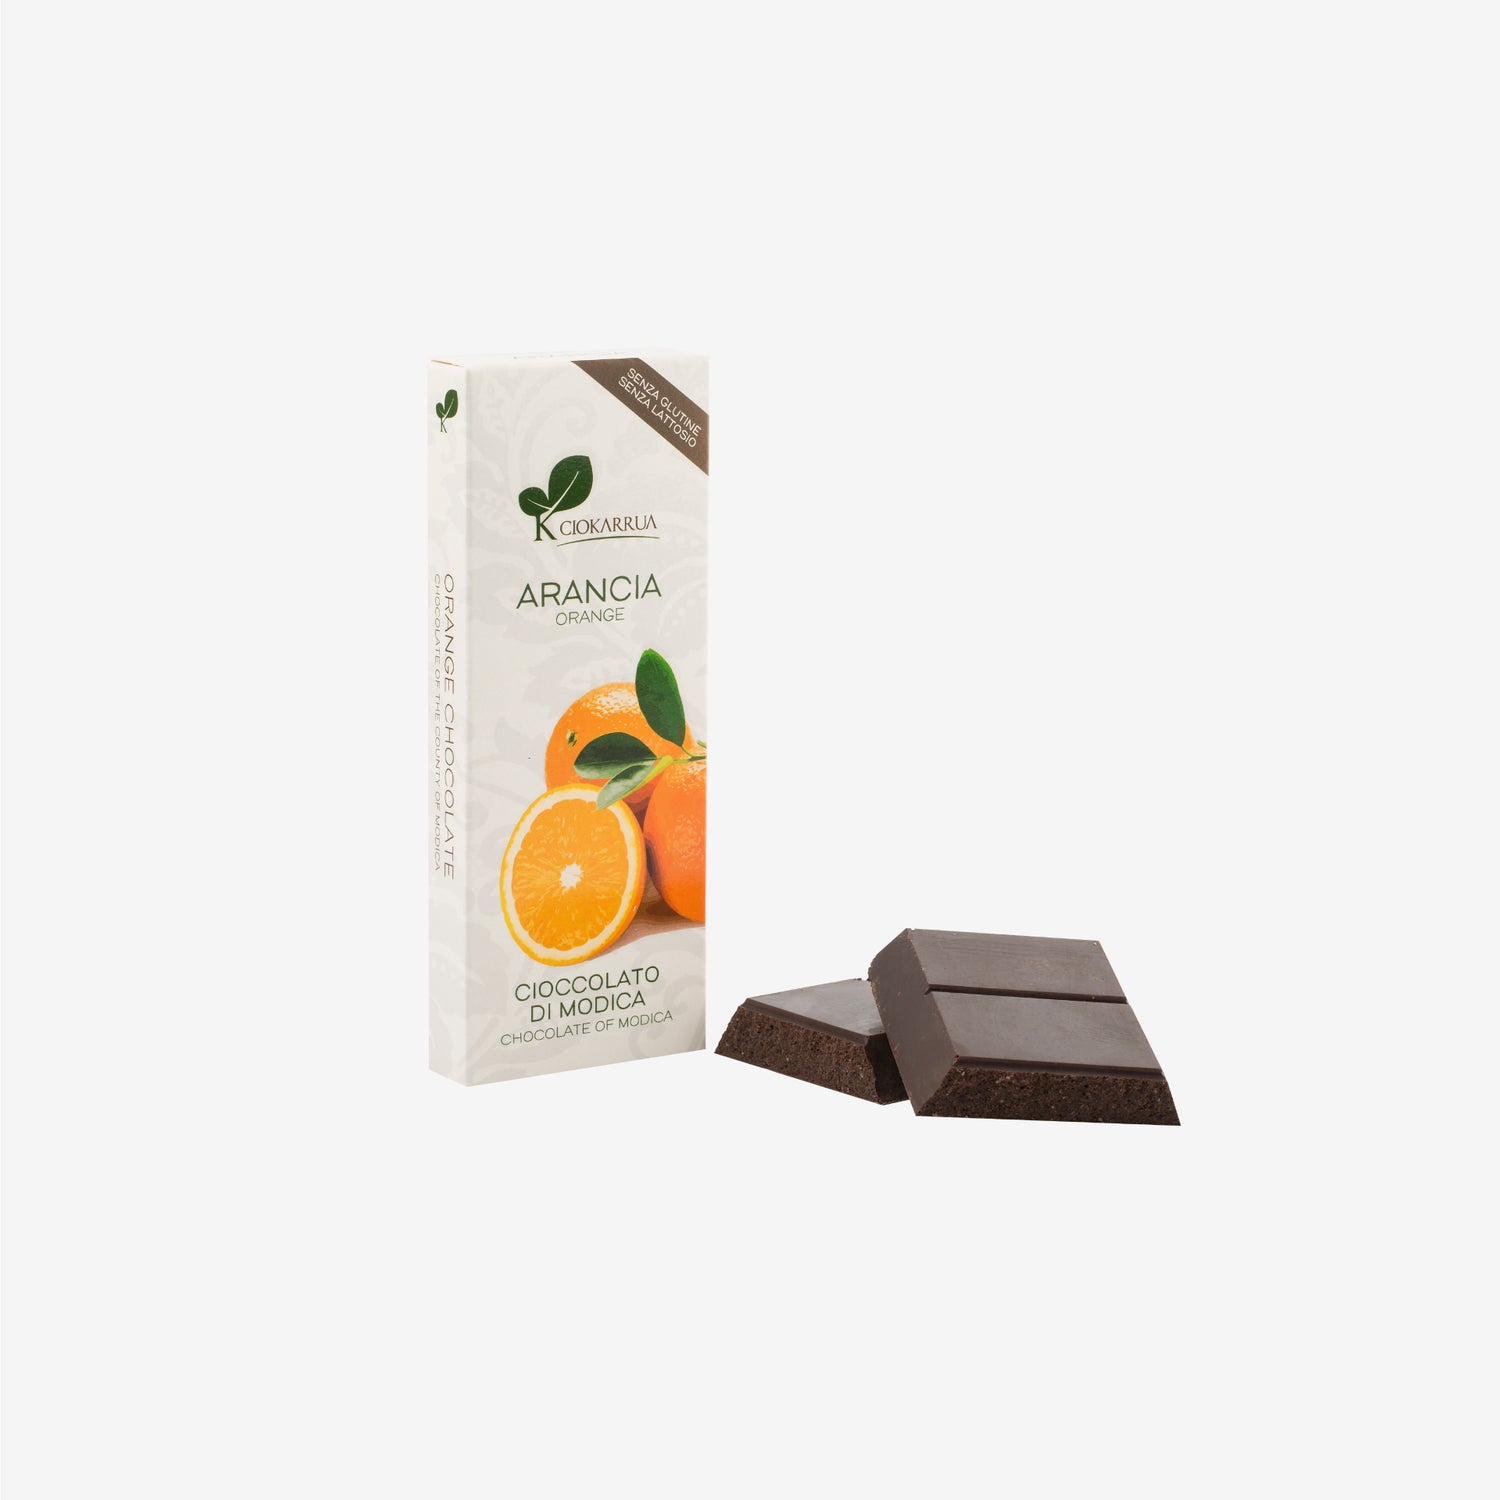 Modica chocolate with orange